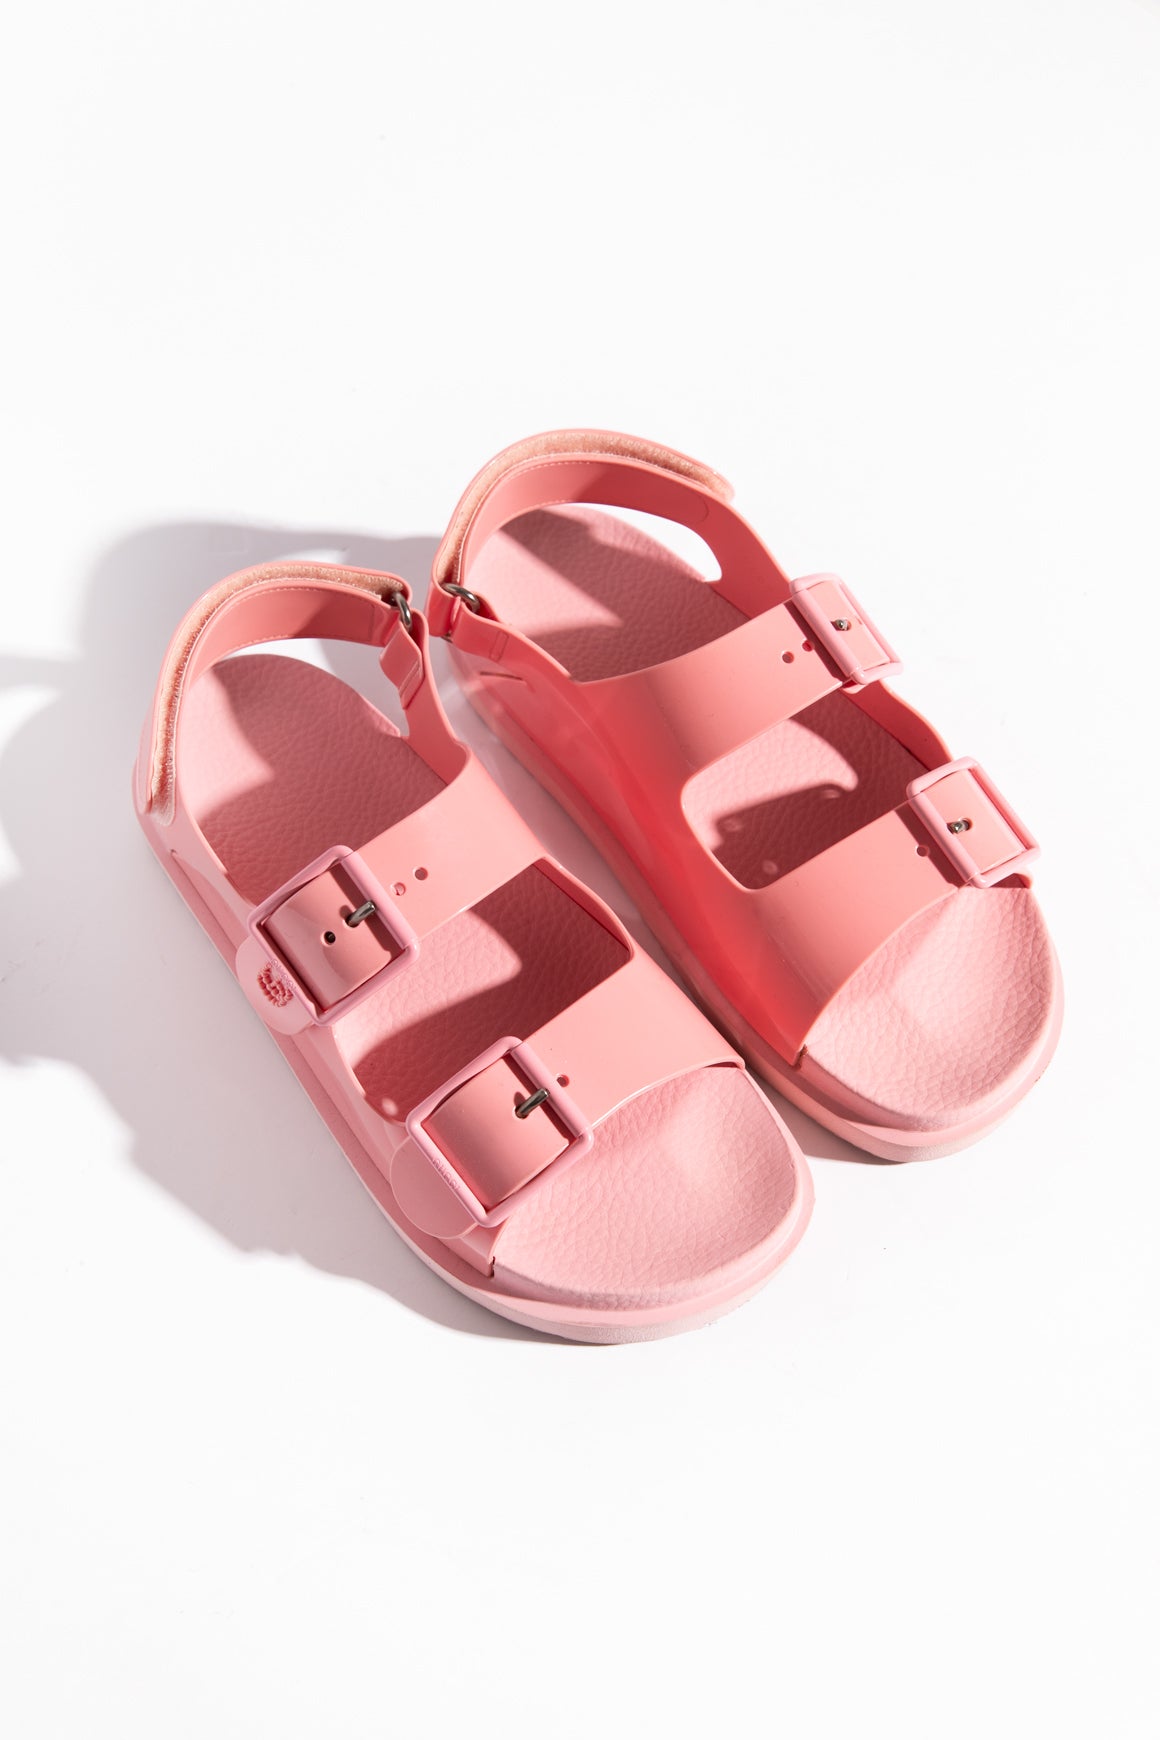 GUCCI Pink Rubber Sandals (Sz. 39)